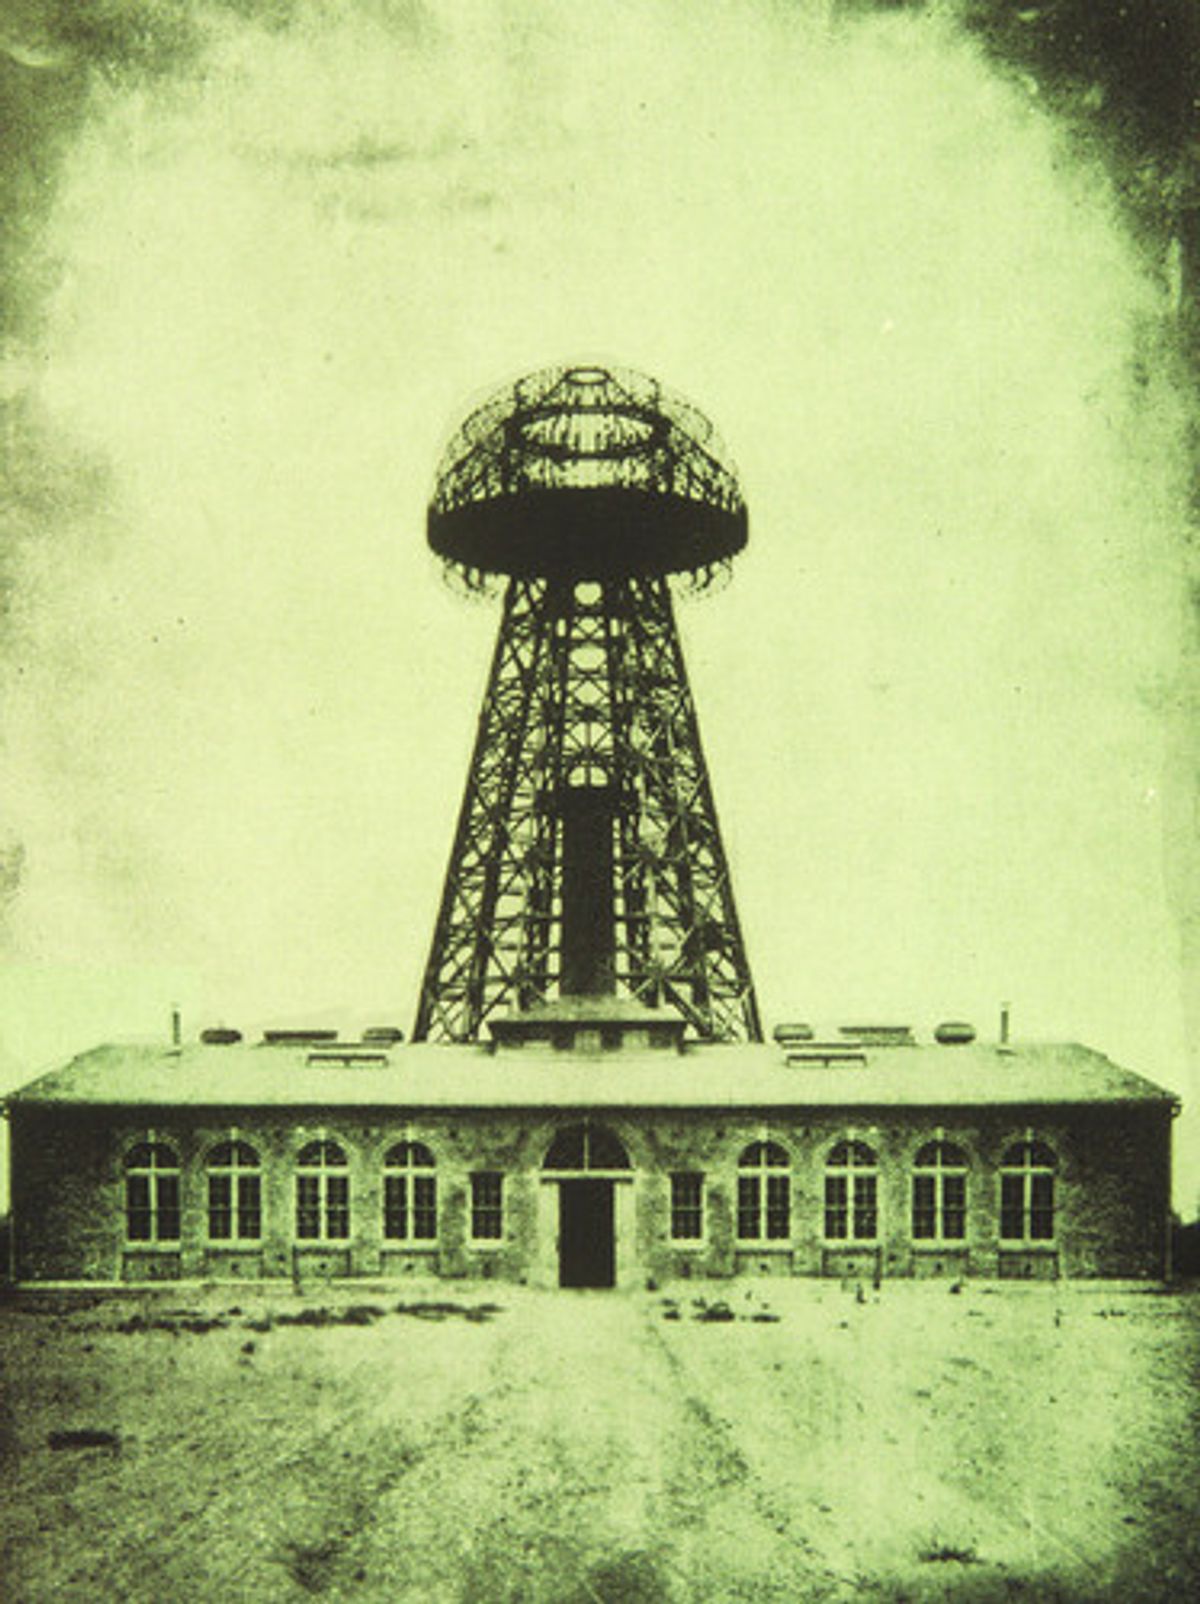 Tesla laboratory and Wardenclyffe Tower